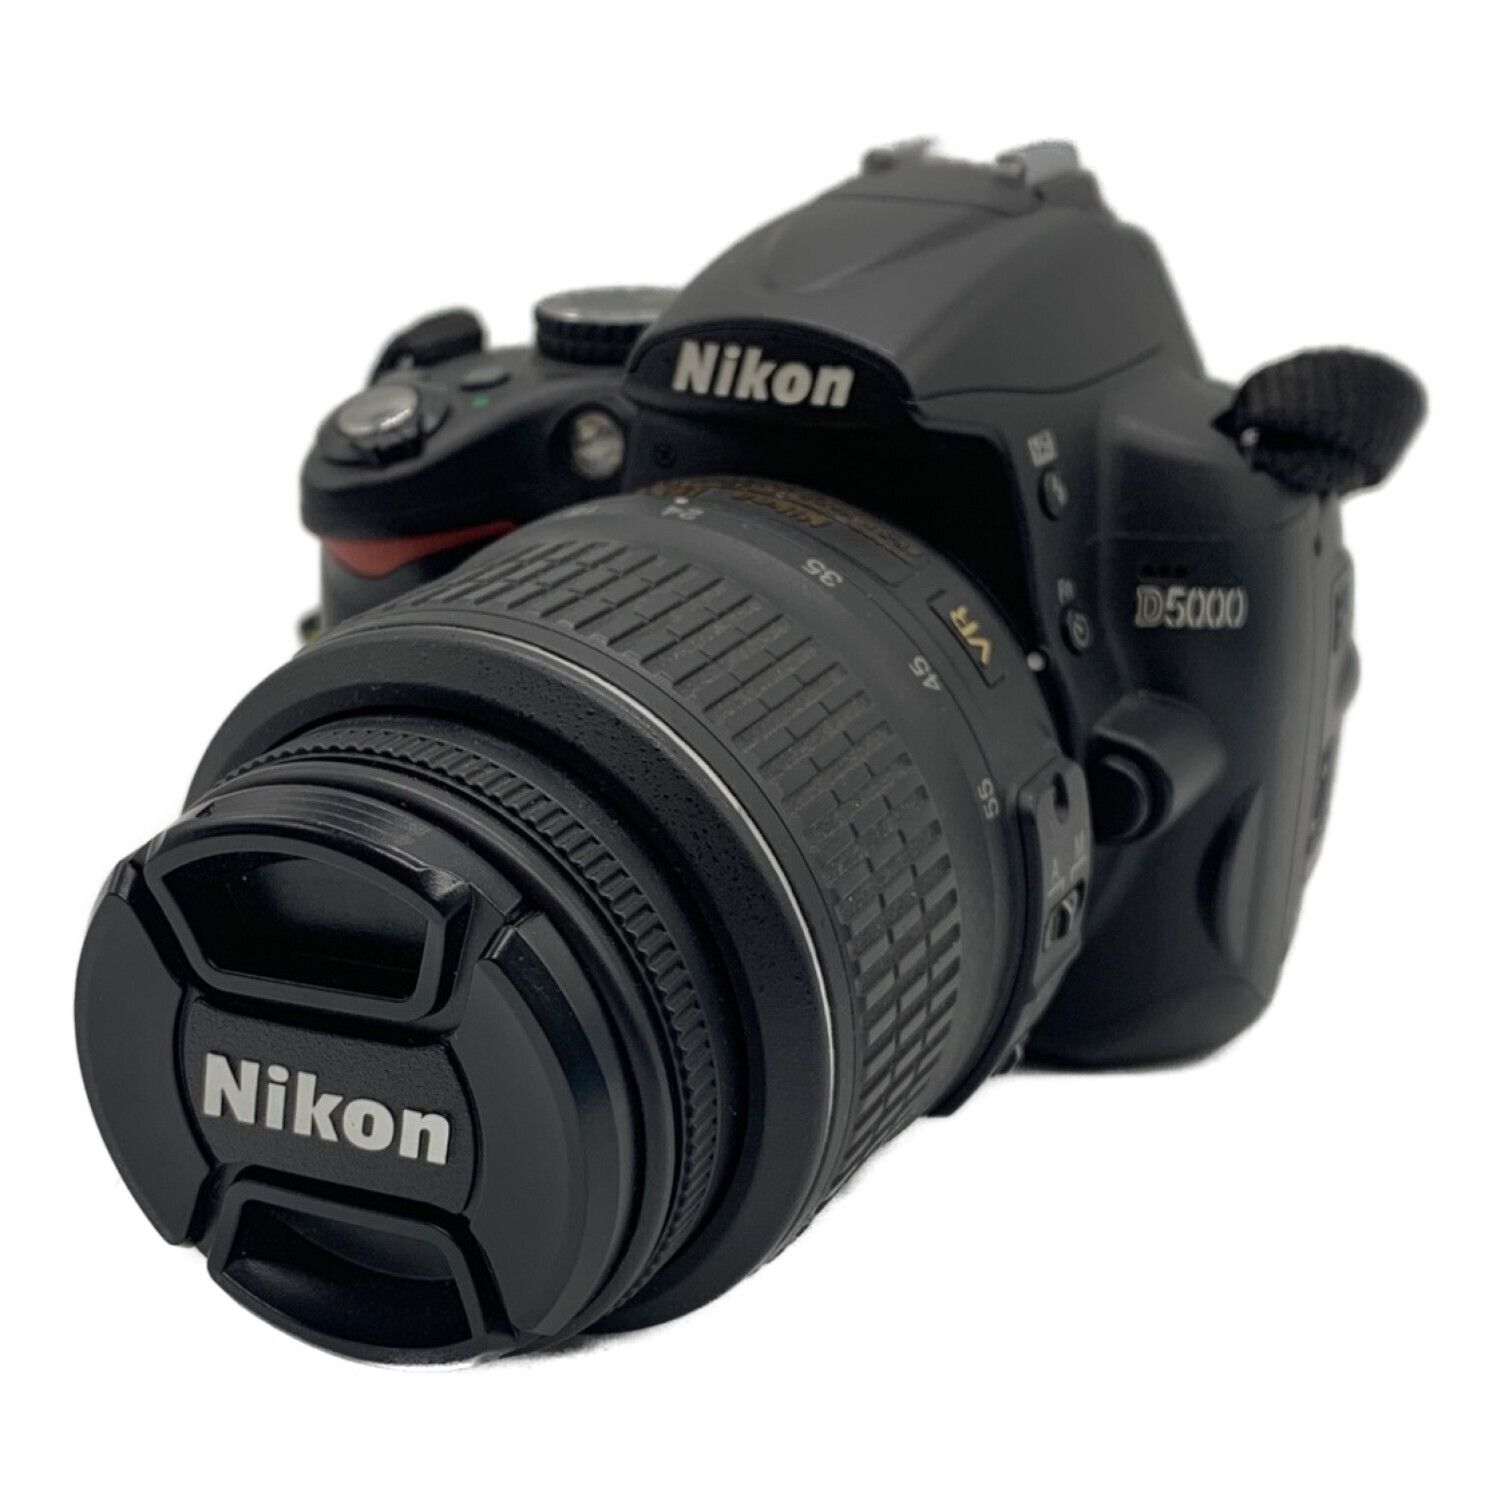 Nikon デジタル一眼レフカメラ D5000 ダブルズームキット D5000WZ - 3